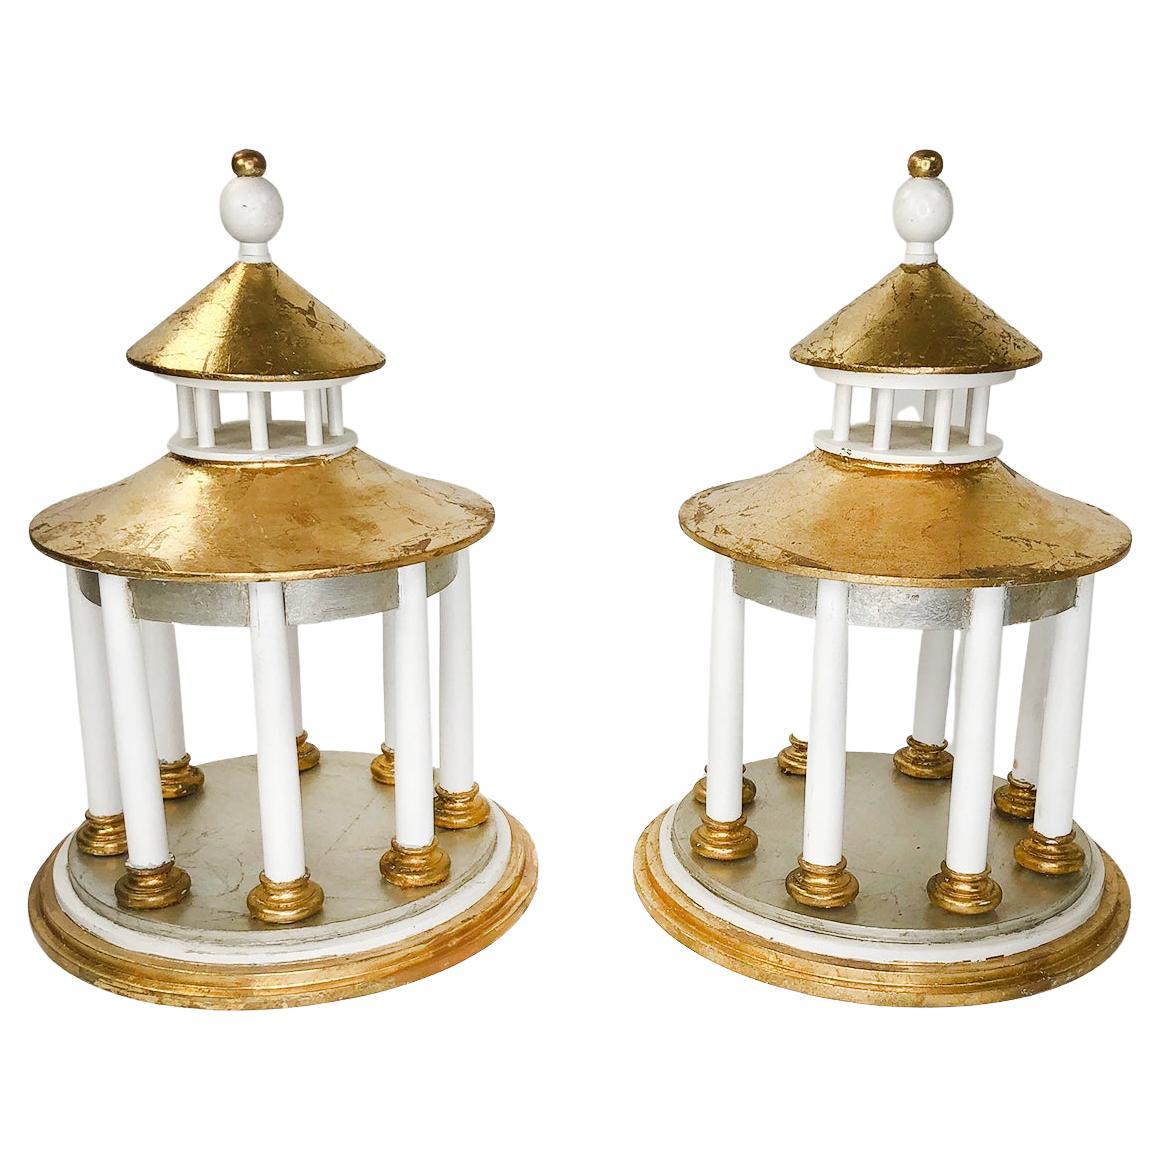 Pair of custom made Hand-Gilt Classical Pagoda Models